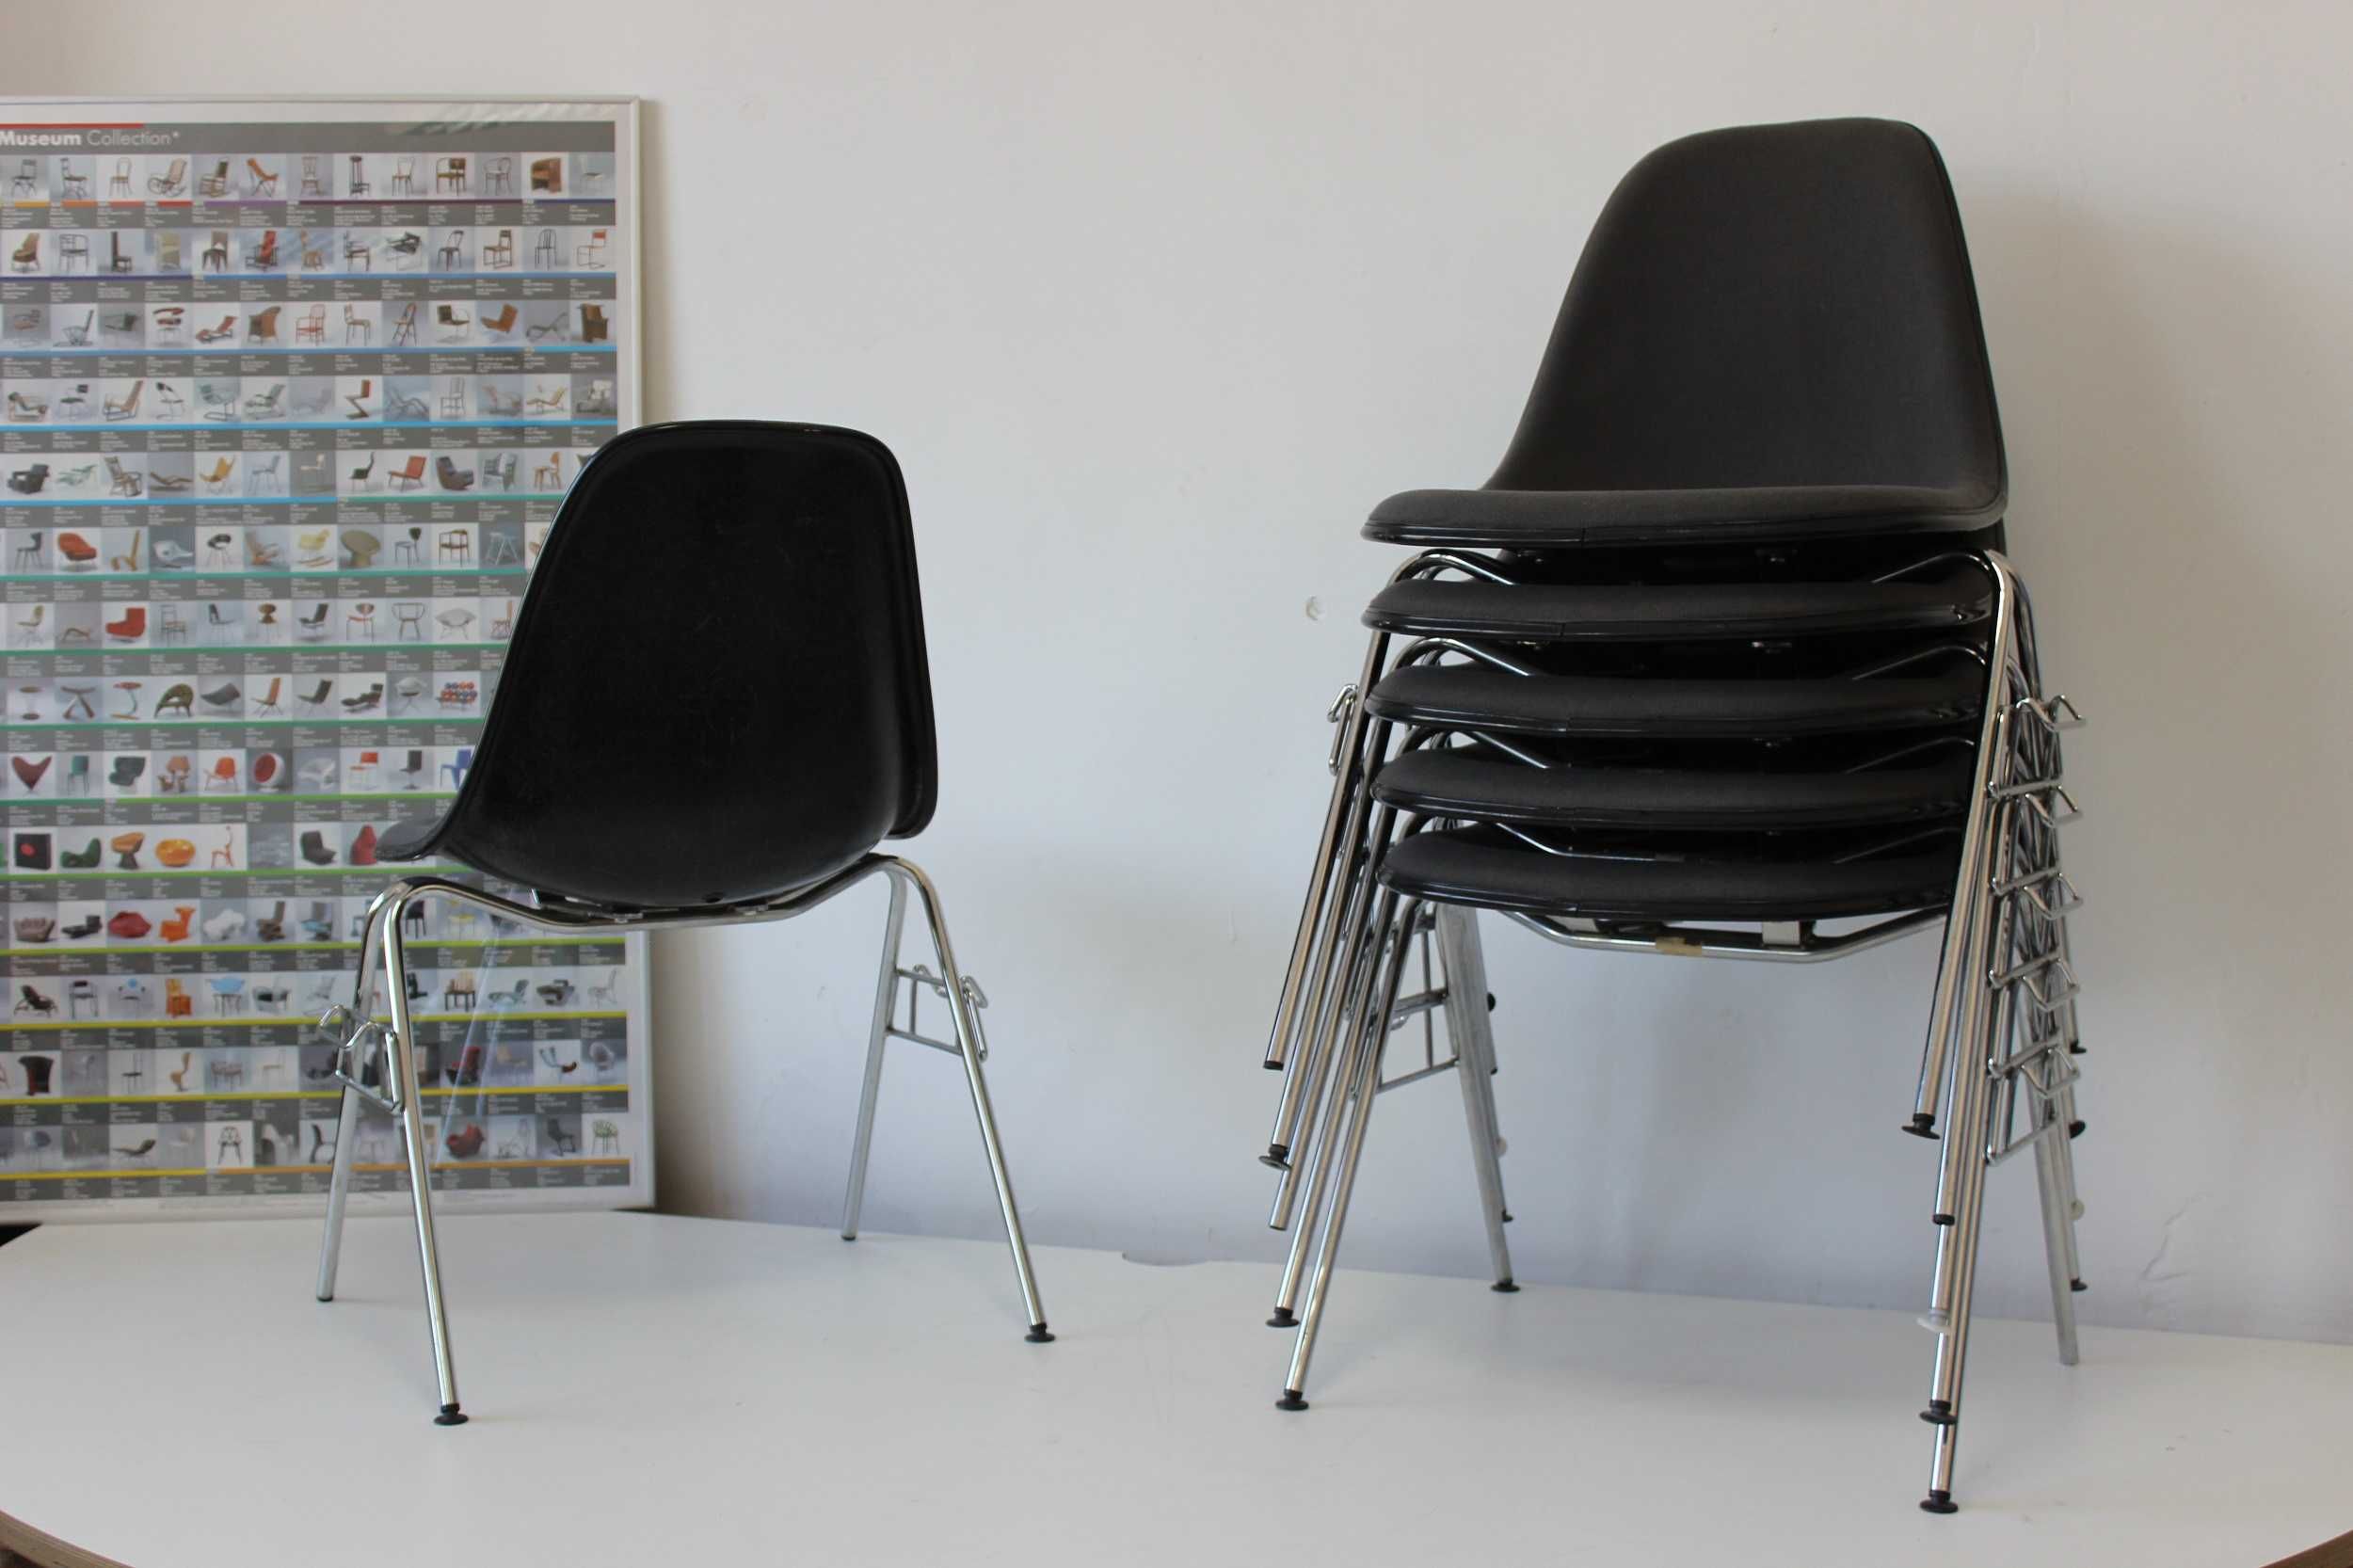 Vitra krzesło,krzesła Roy&Charles Eames DSS fiberglass dostępne 6 szt.